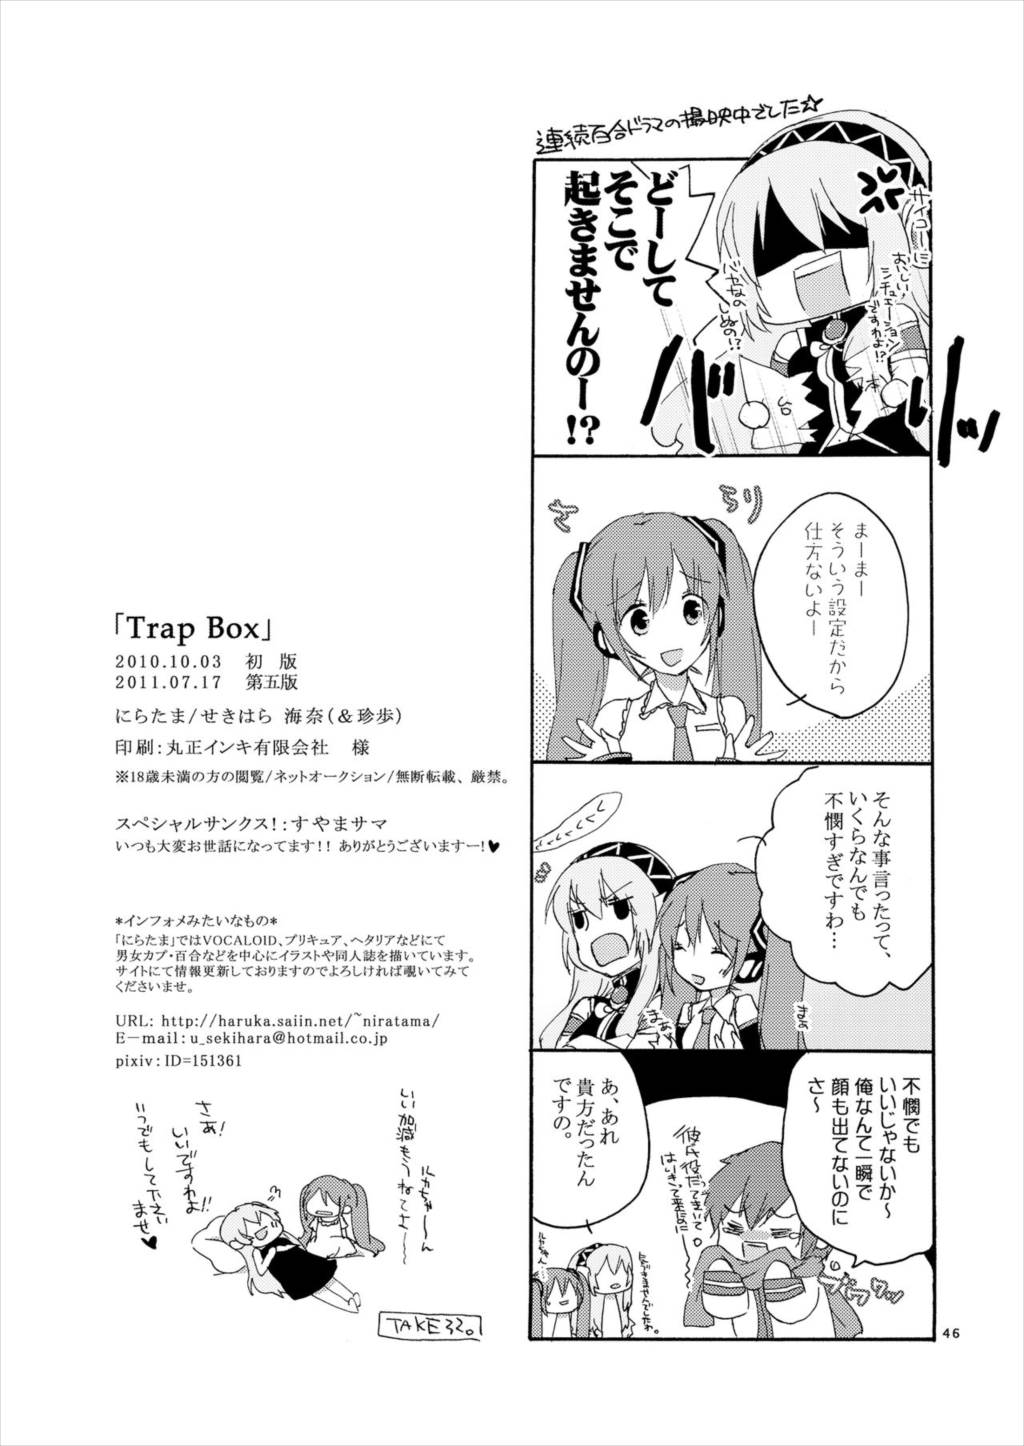 Trap Box 46ページ